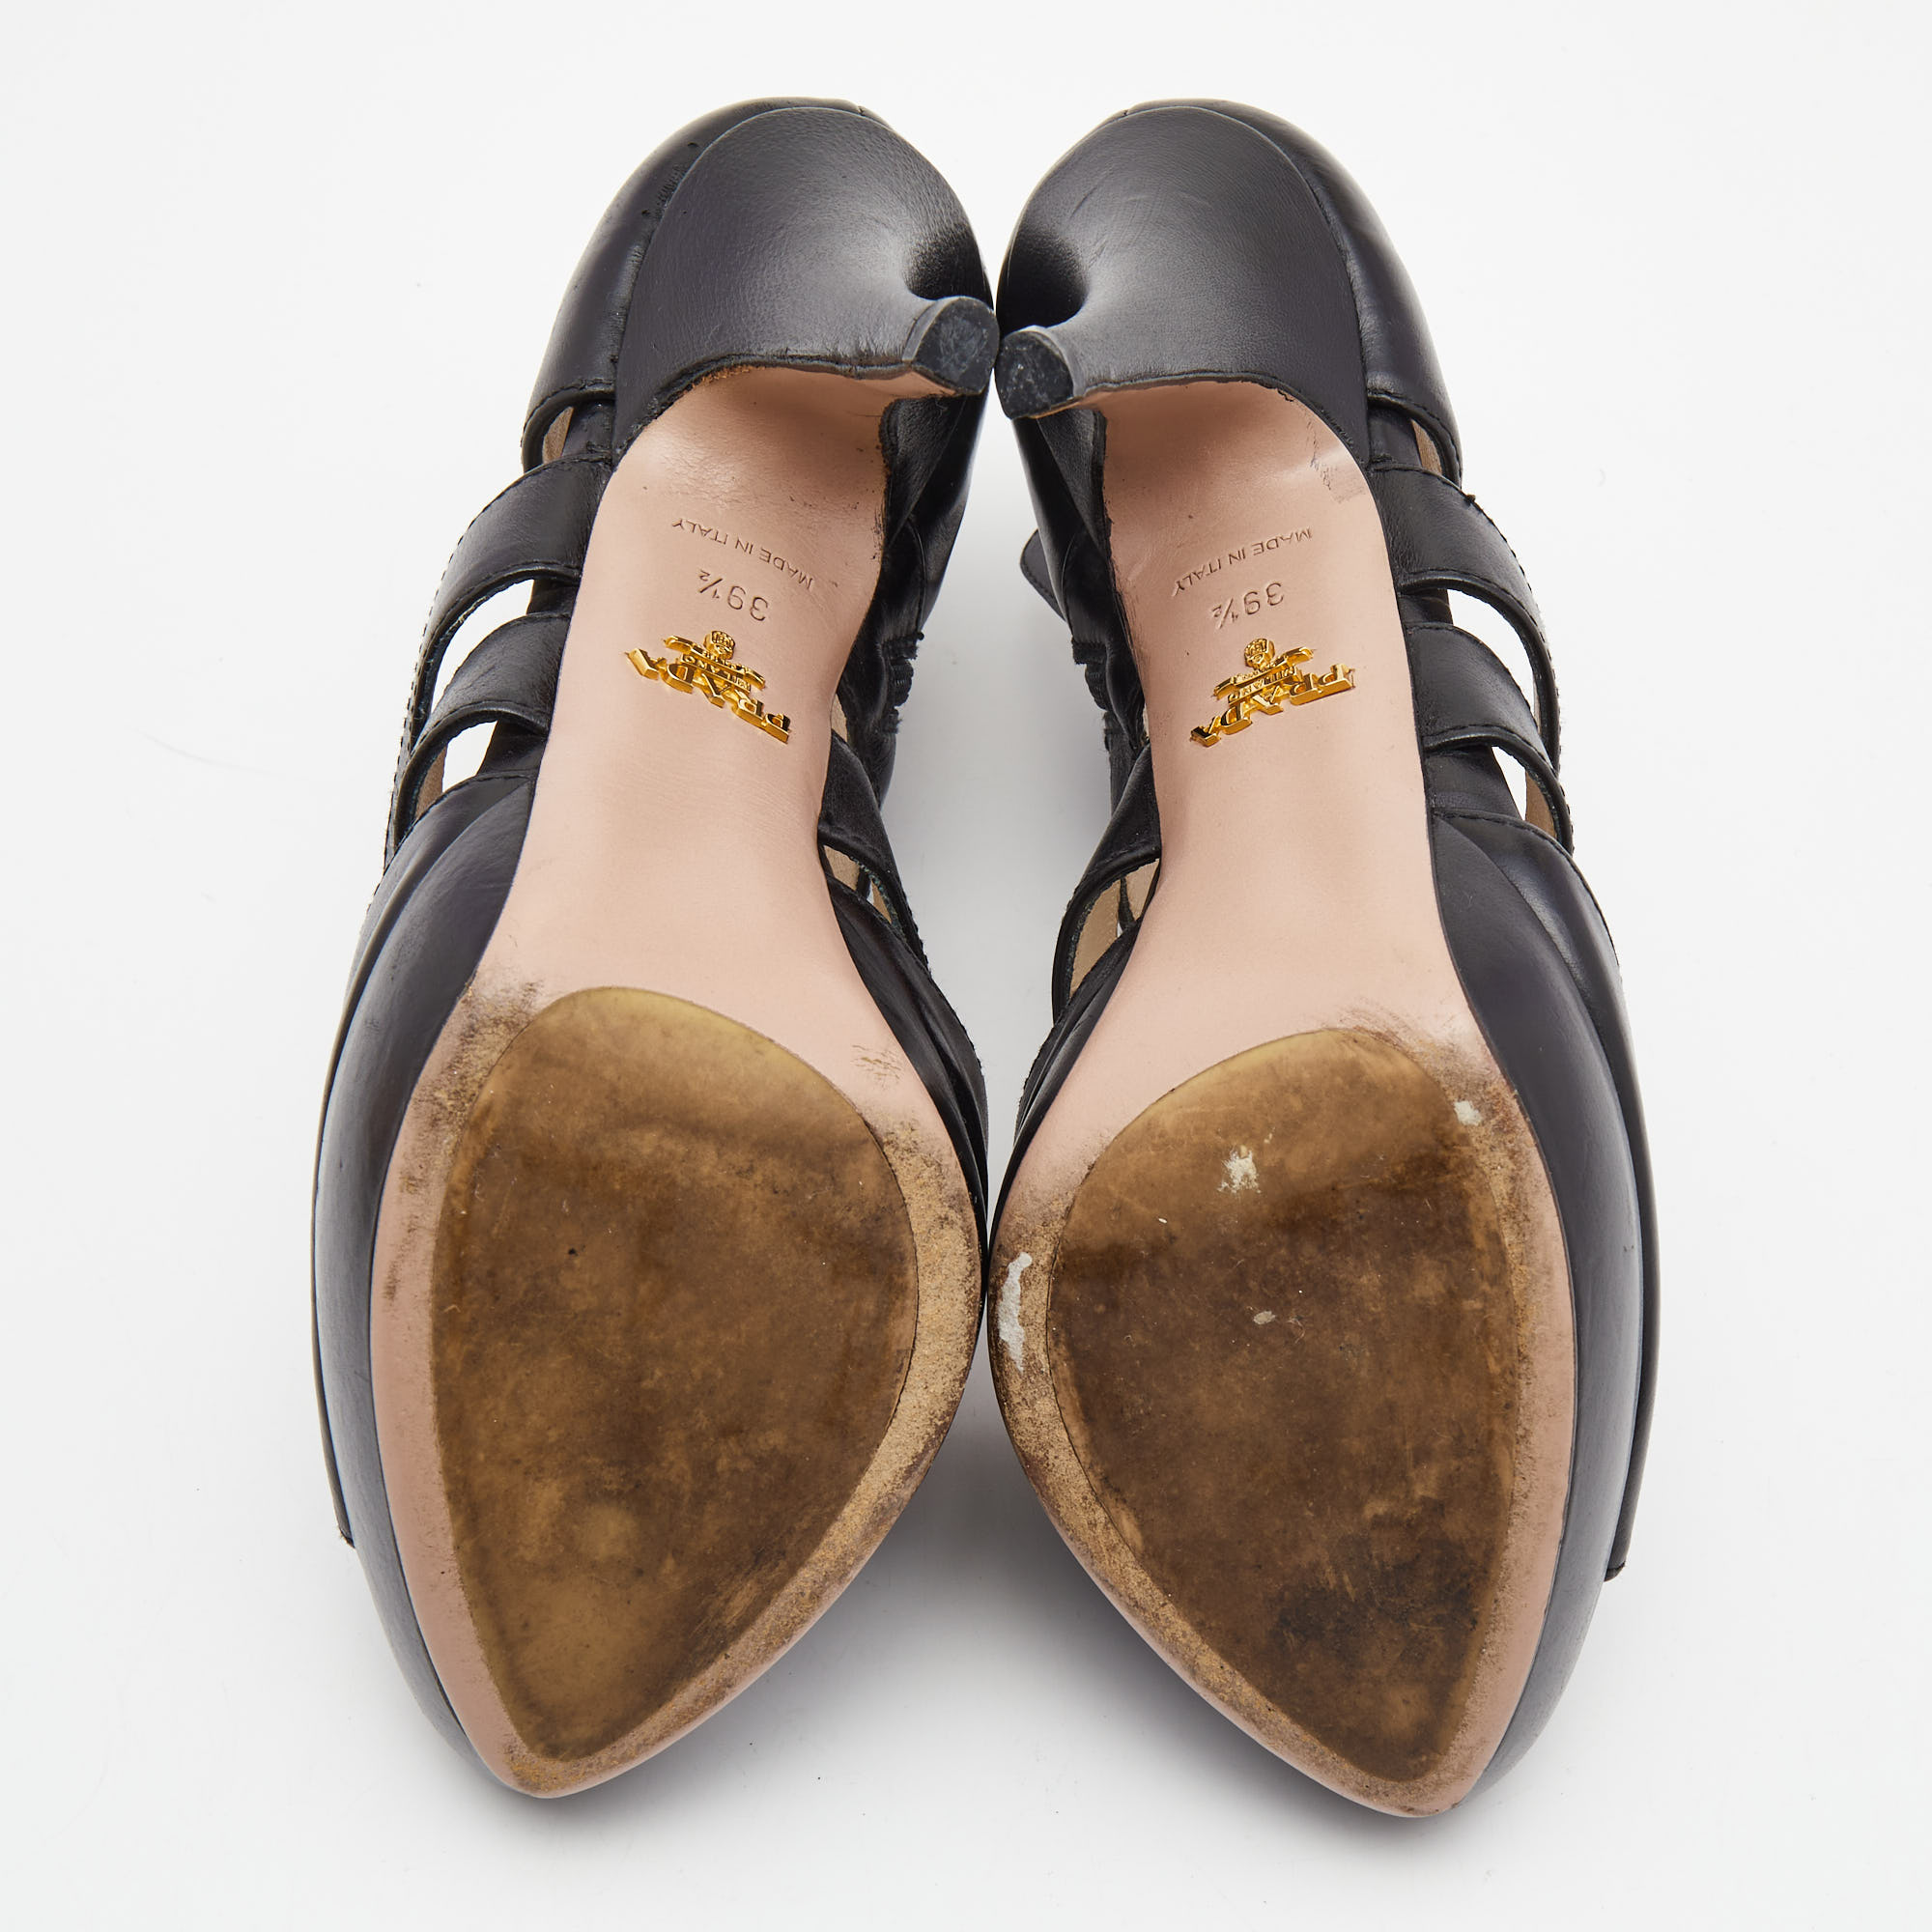 Prada Black Leather Strappy Sandals Size 39.5